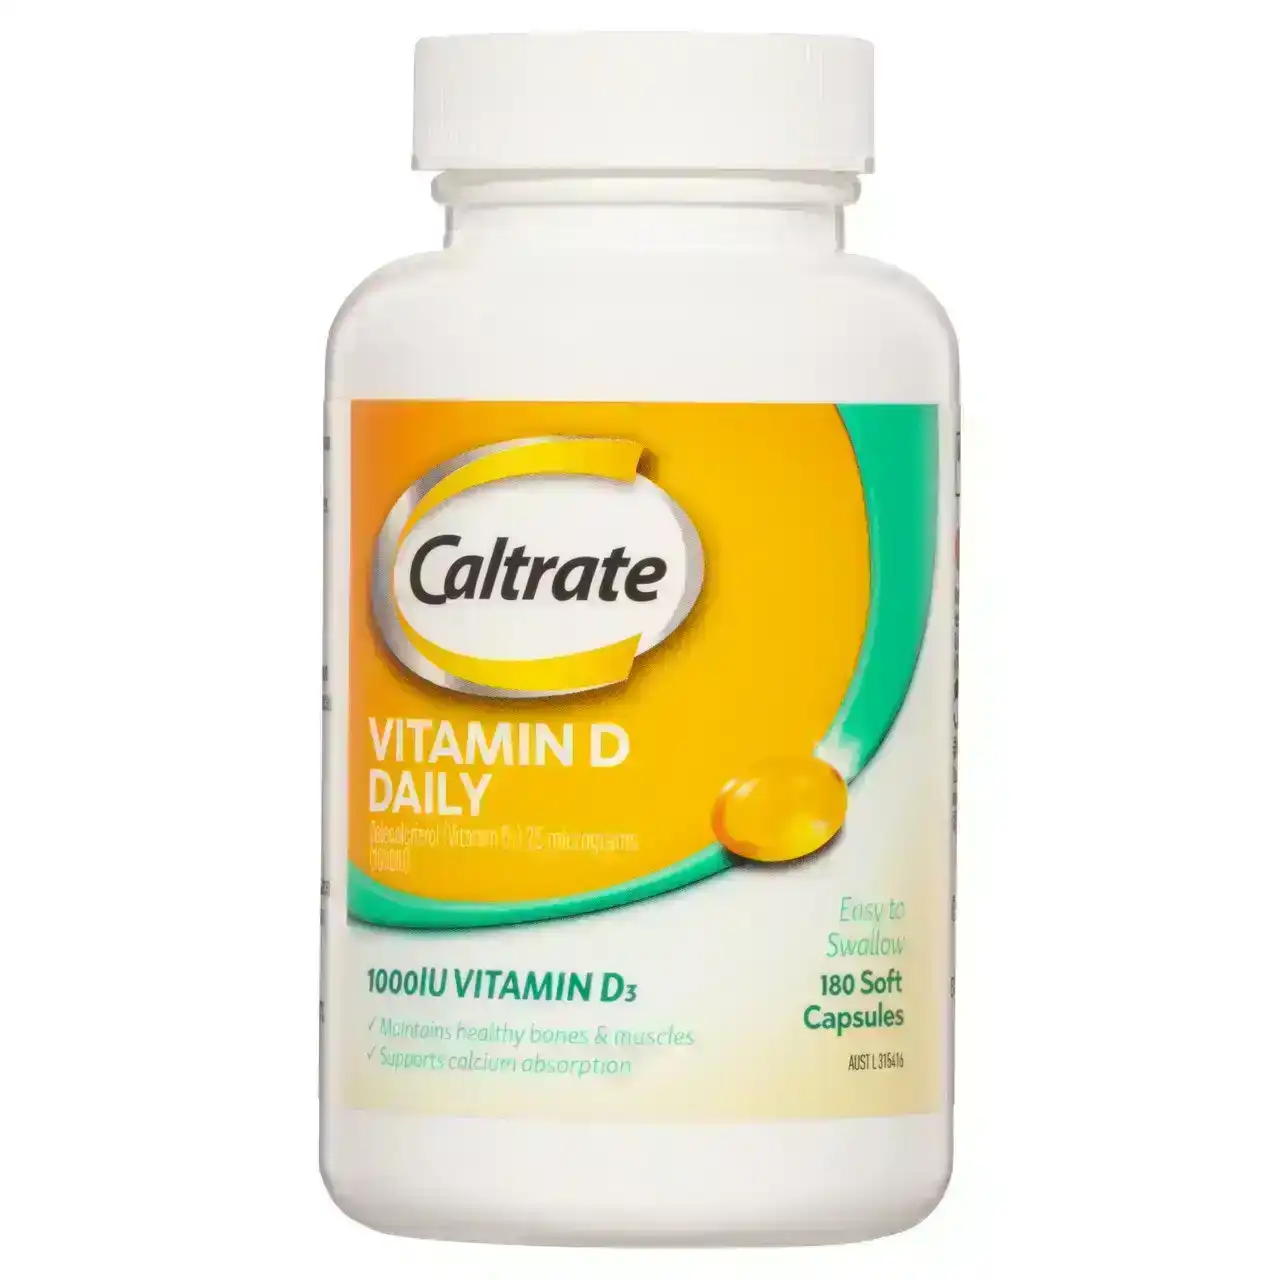 Caltrate Vitamin D Daily 180 Soft Capsules